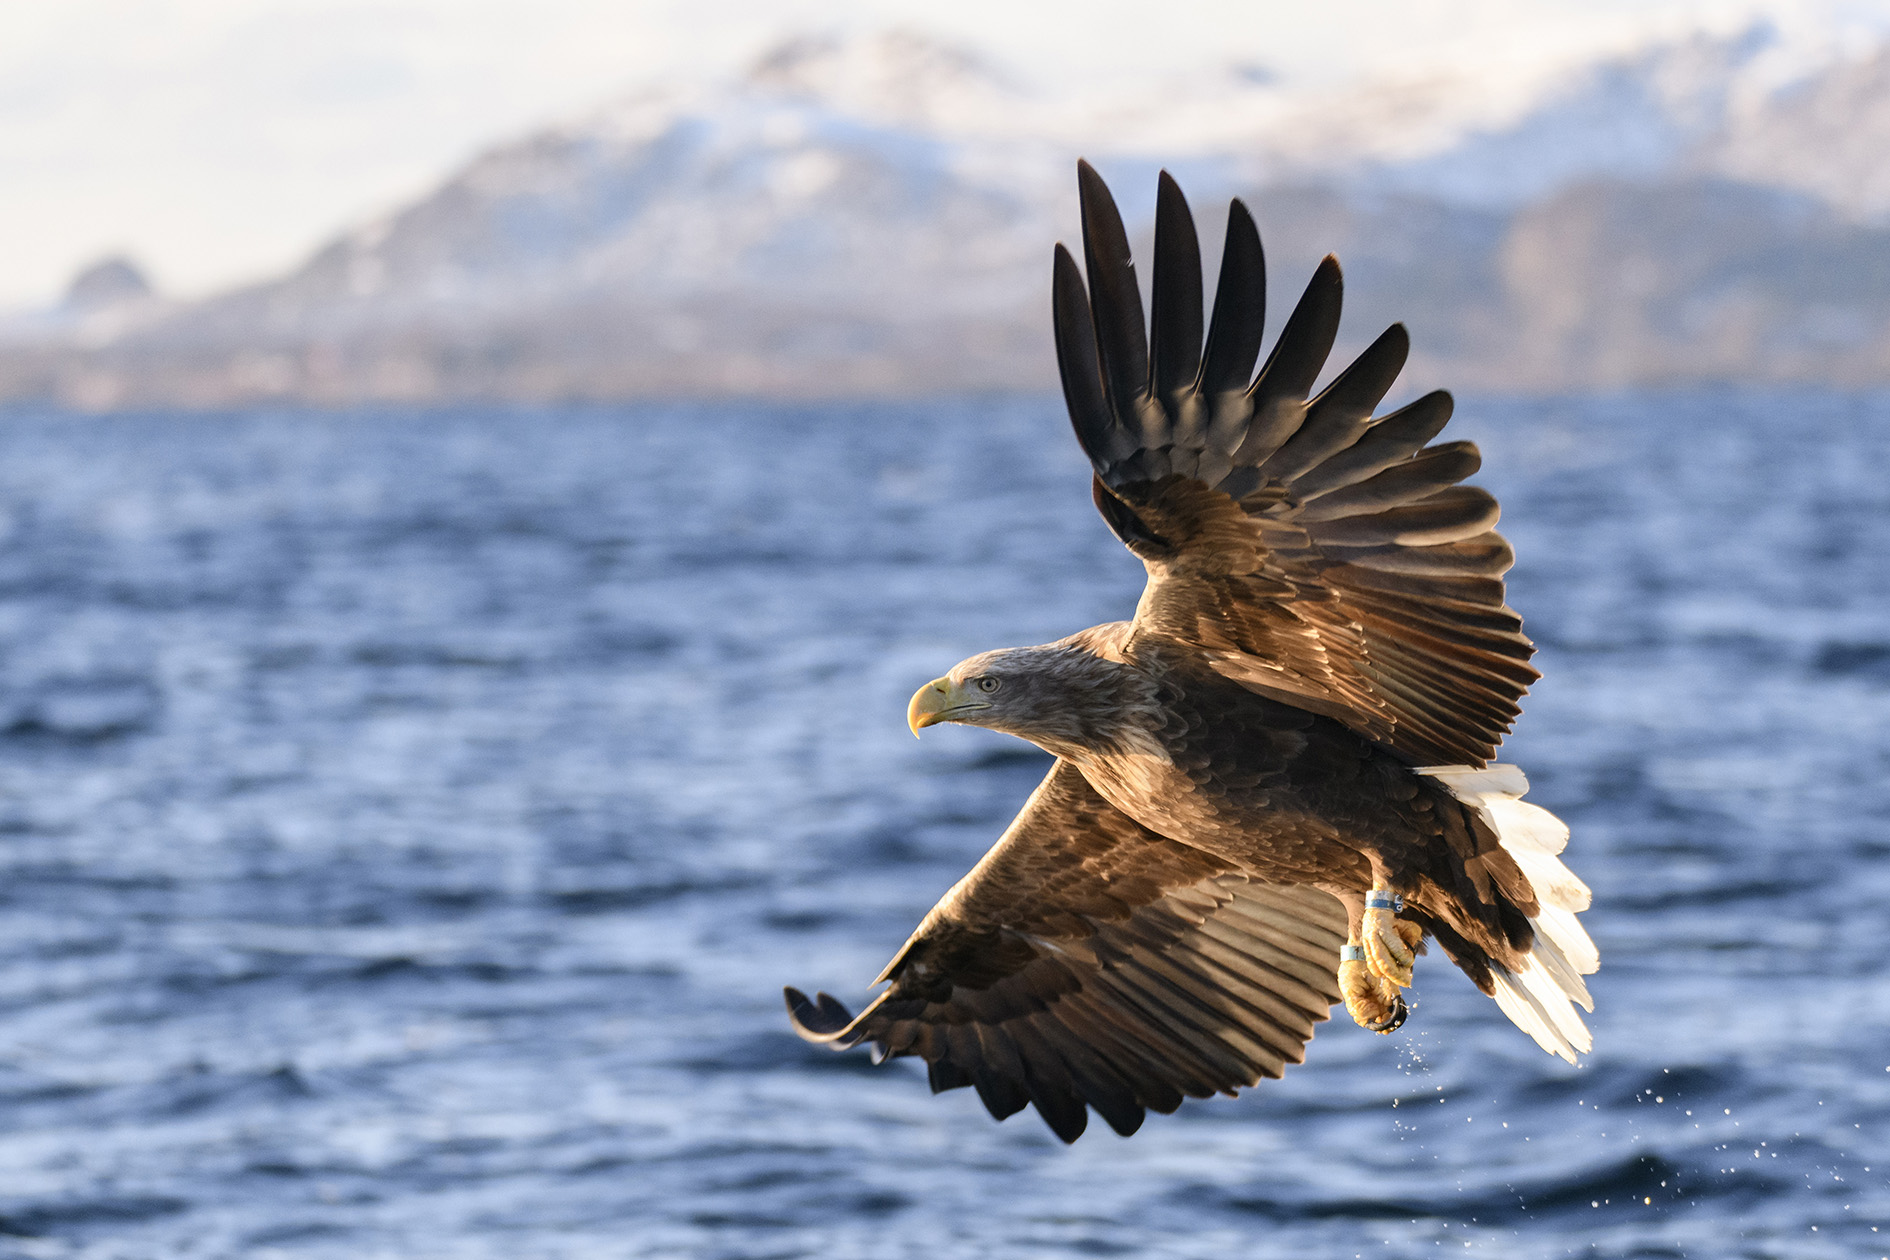 White-tailed sea eagles – Return of the Native